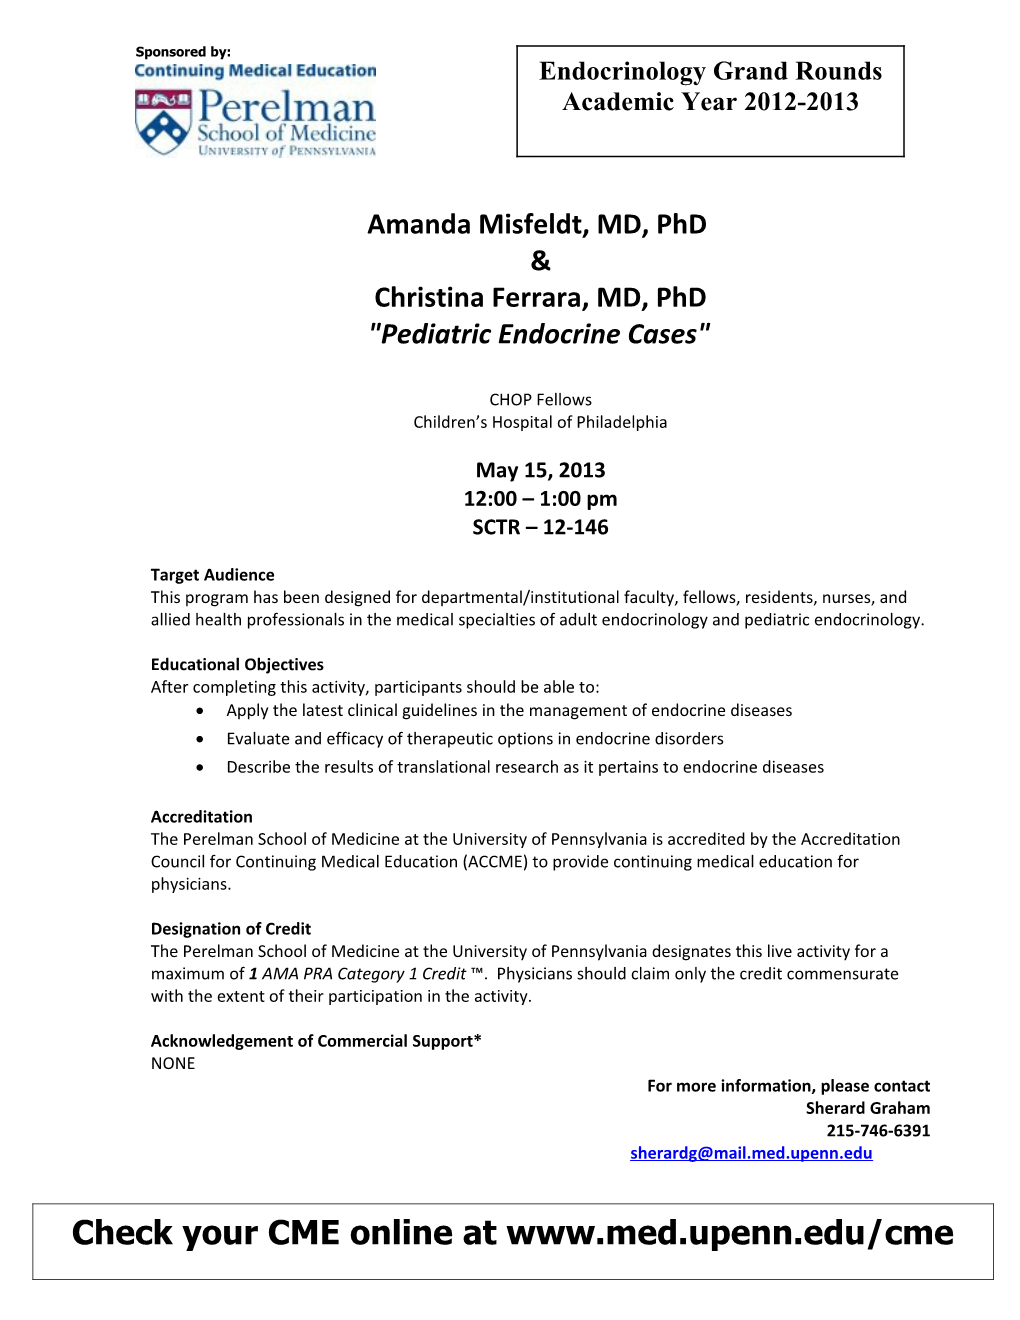 Amanda Misfeldt, MD, Phd Christina Ferrara, MD, Phd Pediatric Endocrine Cases